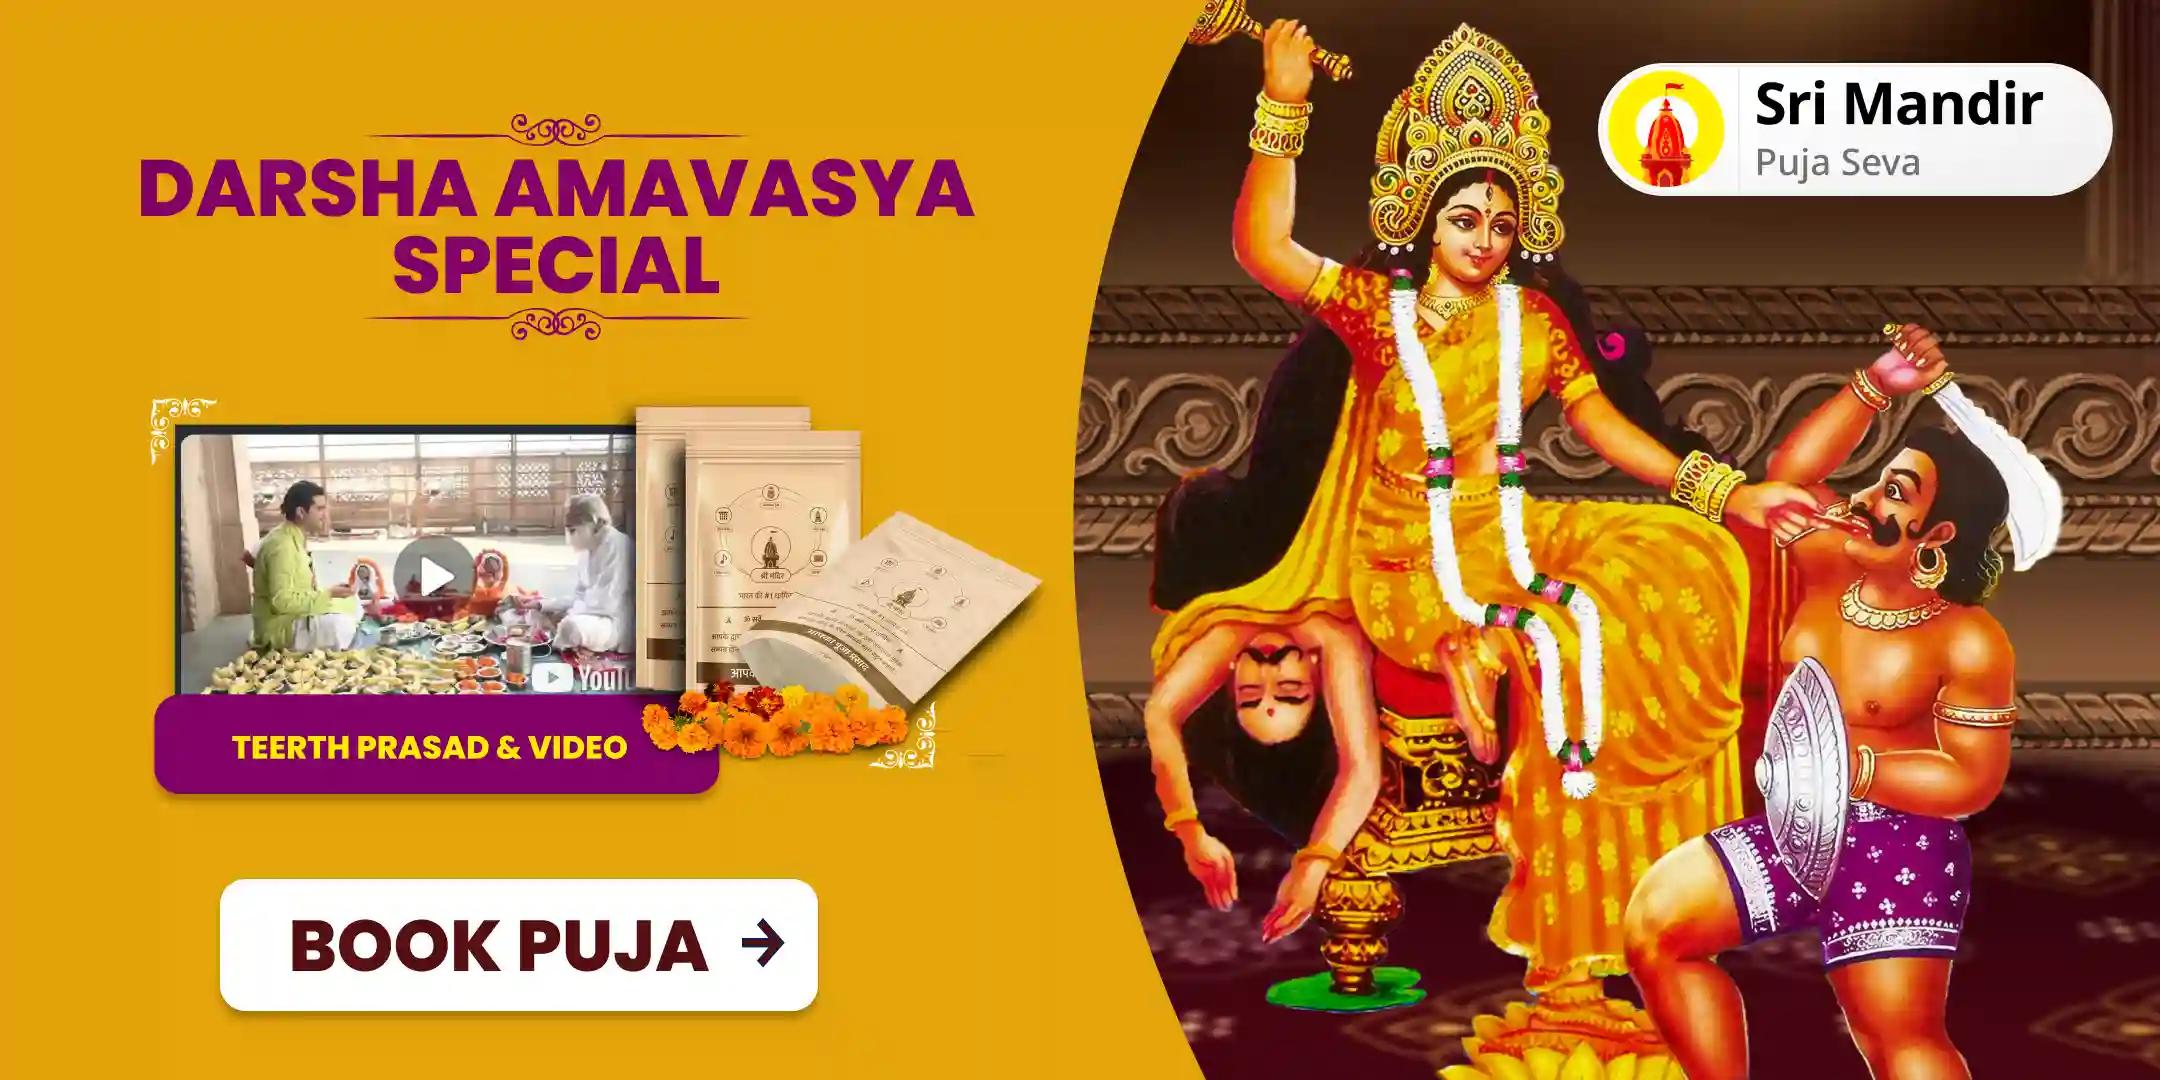 Darsha Amavasya Special Sarva Karya Siddhi Maa Bagalamukhi Tantra Yukta Mahayagya for Fulfilment of all Desires